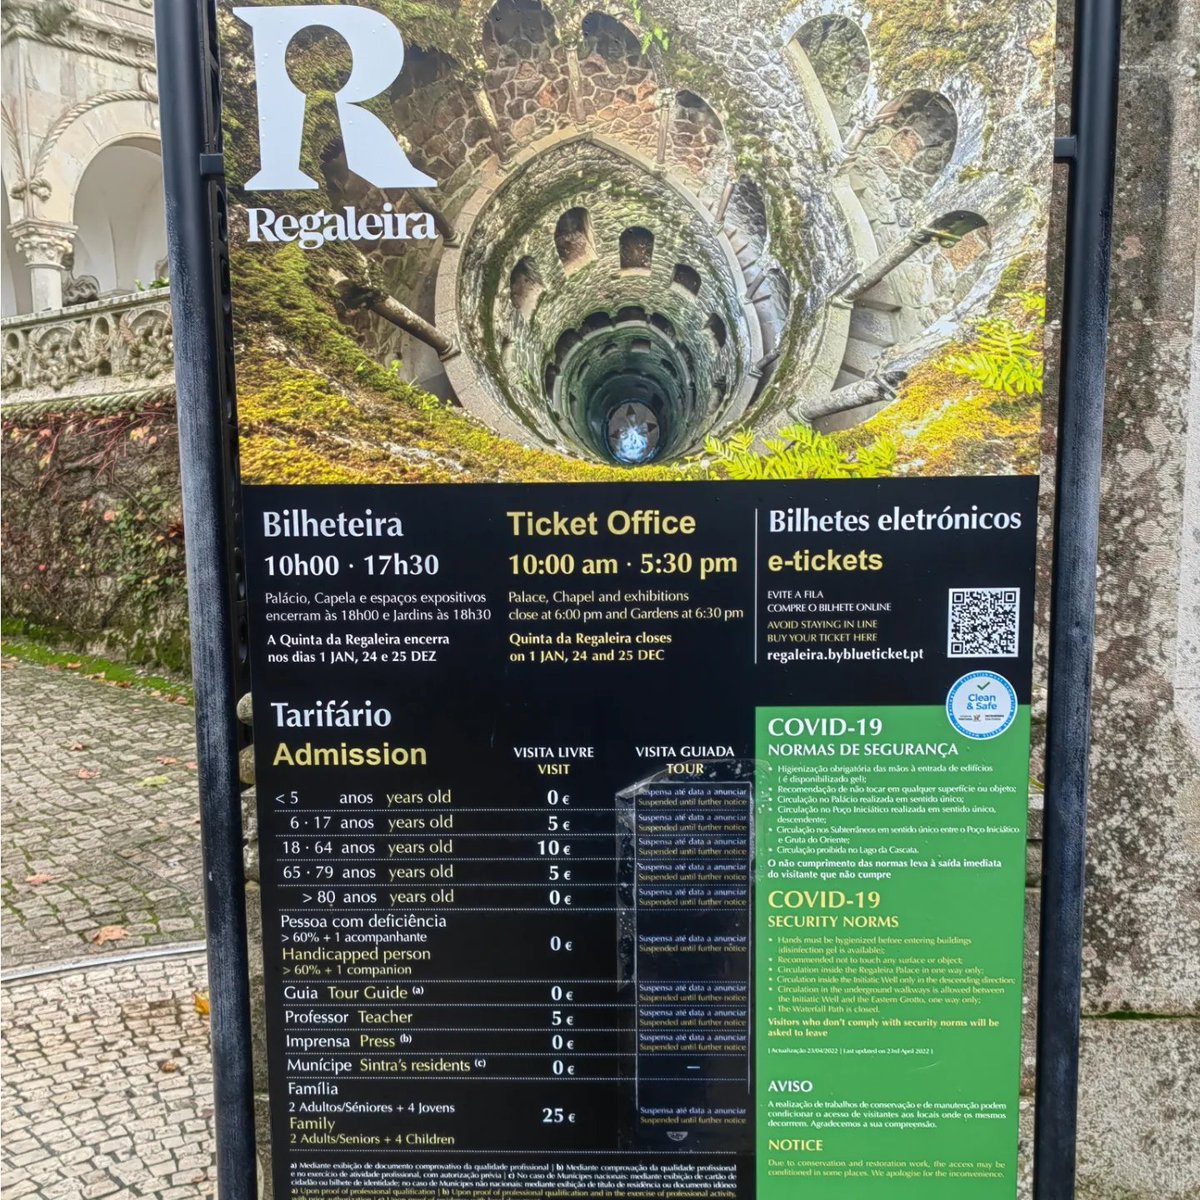 Quinta da Regaleira,214th world heritage for me,Sintra,Portugal.
ポルトガル、214個目の世界遺産、シントラのレガレイラ宮殿。
#sintra #Portugal #worldheritage #heritage
#世界遺産 #ポルトガル #シントラ #quintadaregaleira #regaleira #レガレイラ宮殿